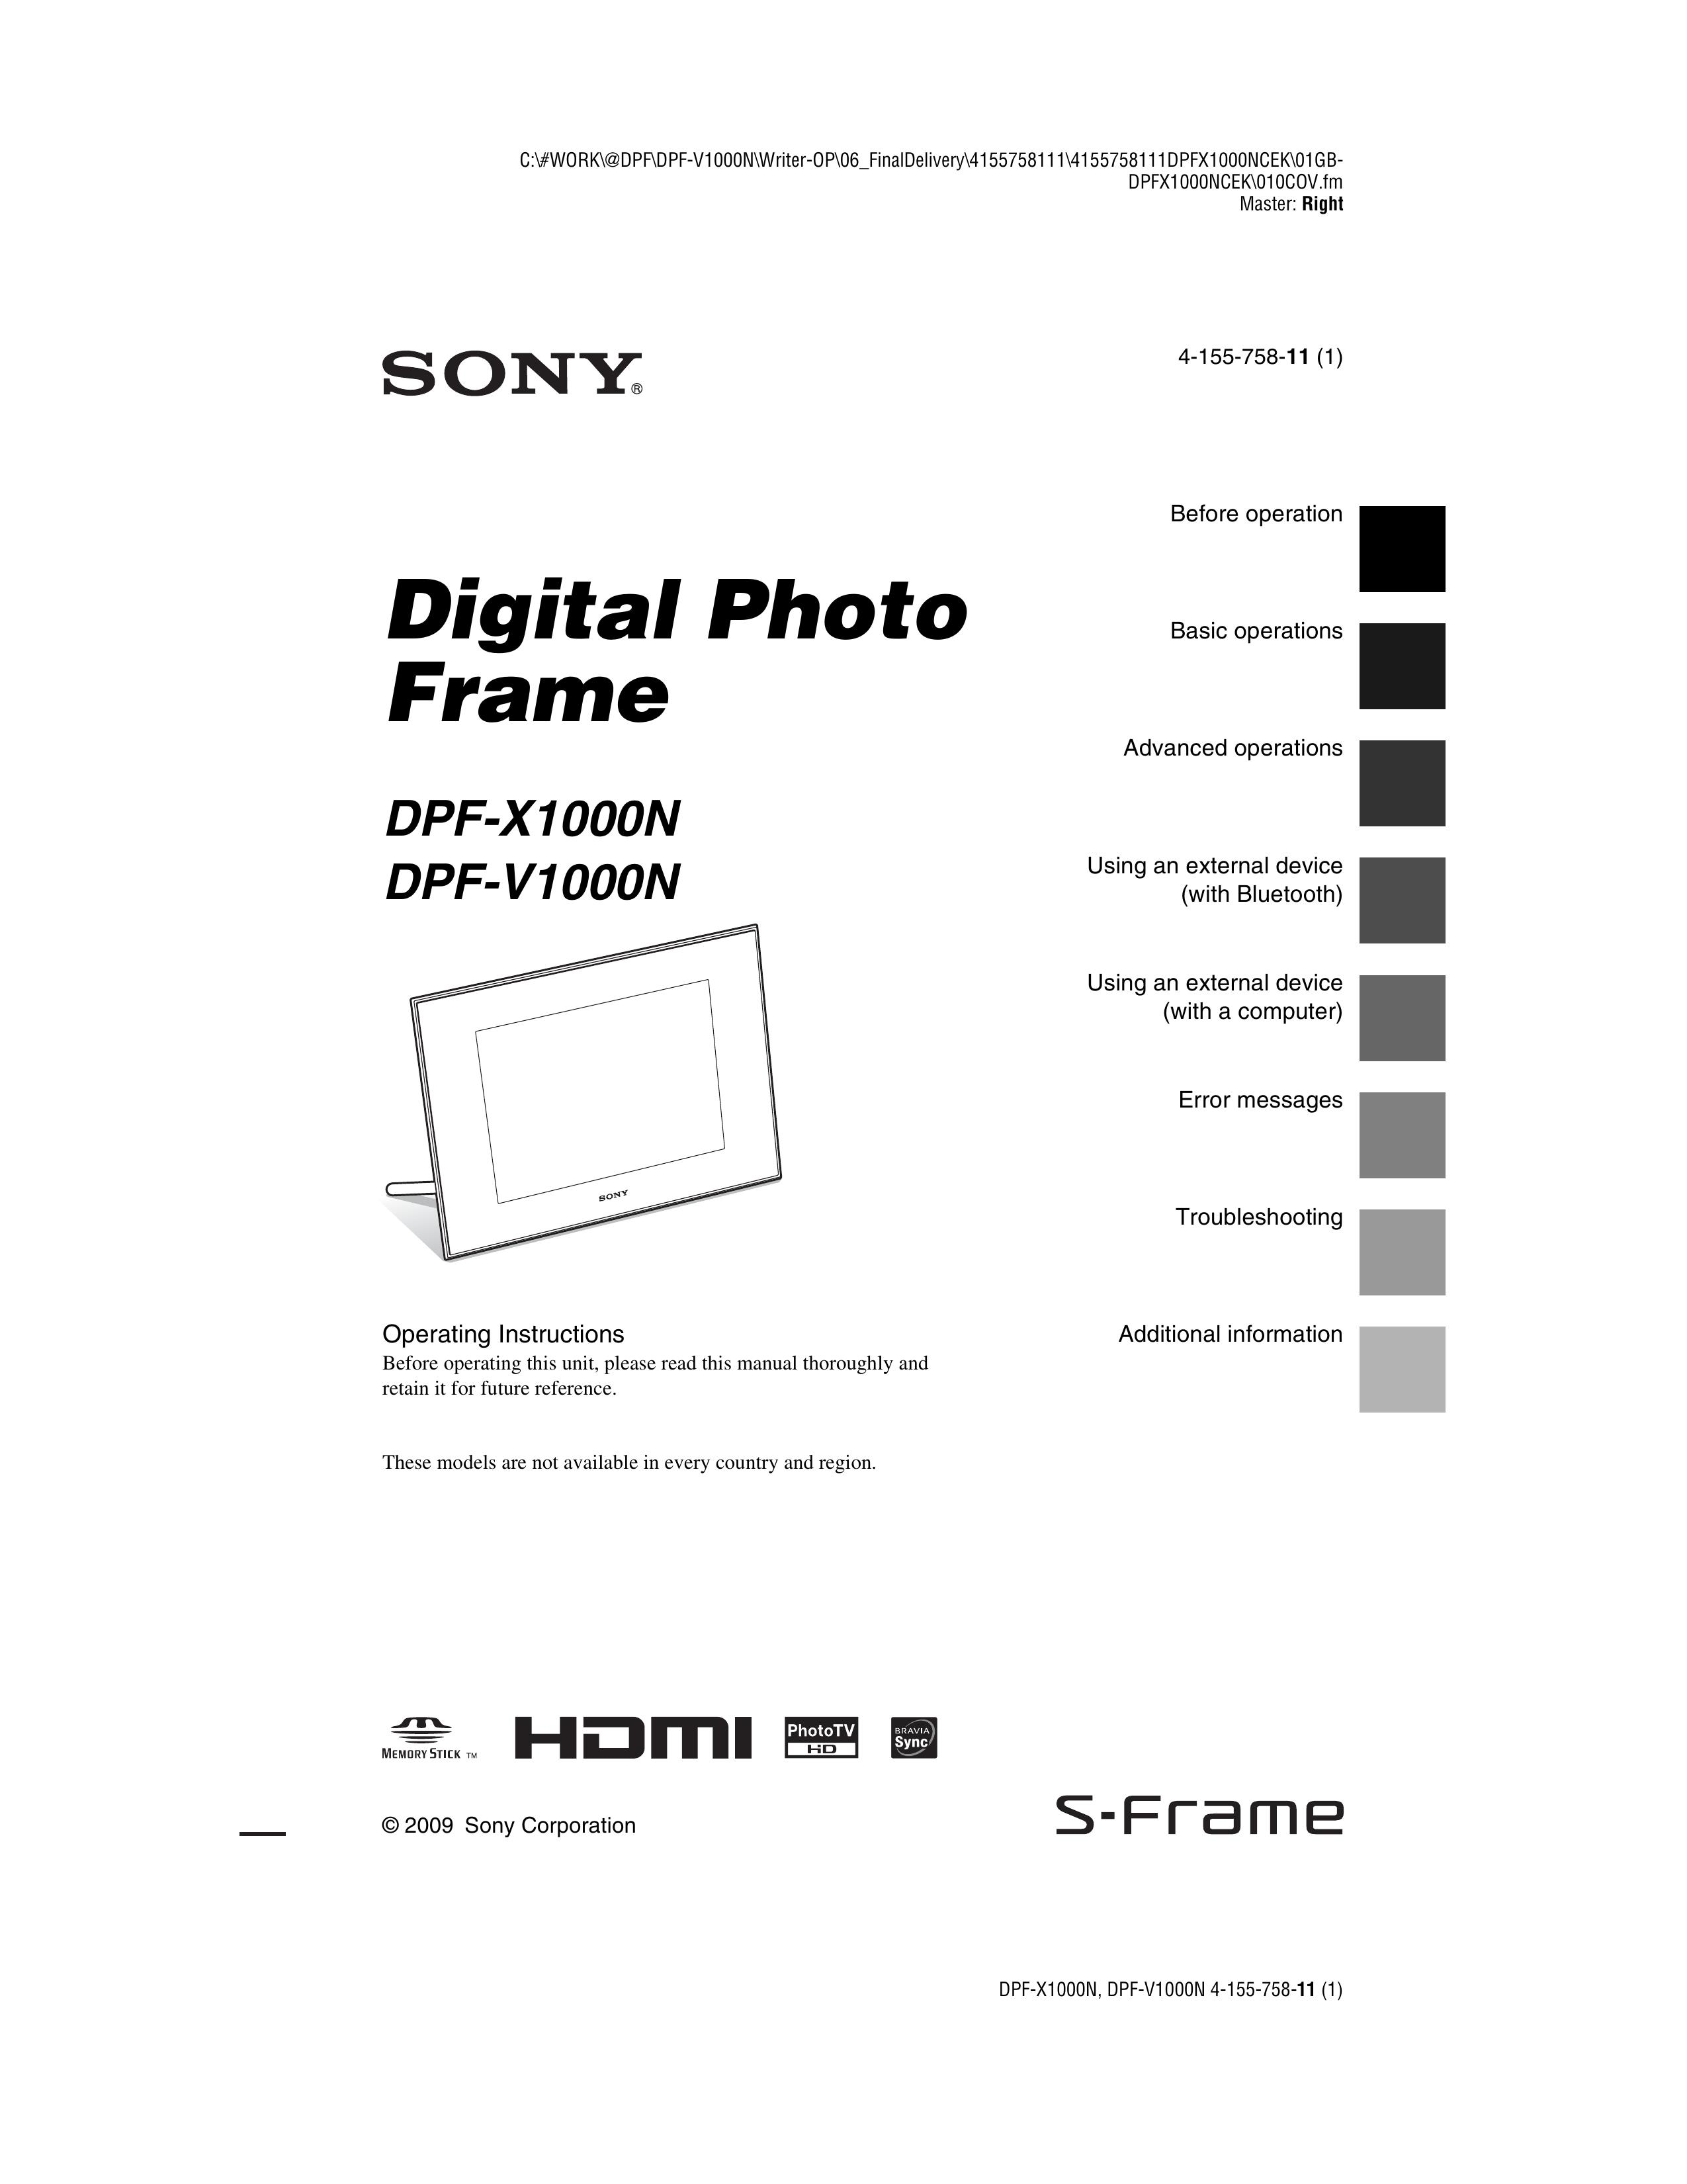 Sony 4-155-758-11 (1) Digital Photo Frame User Manual